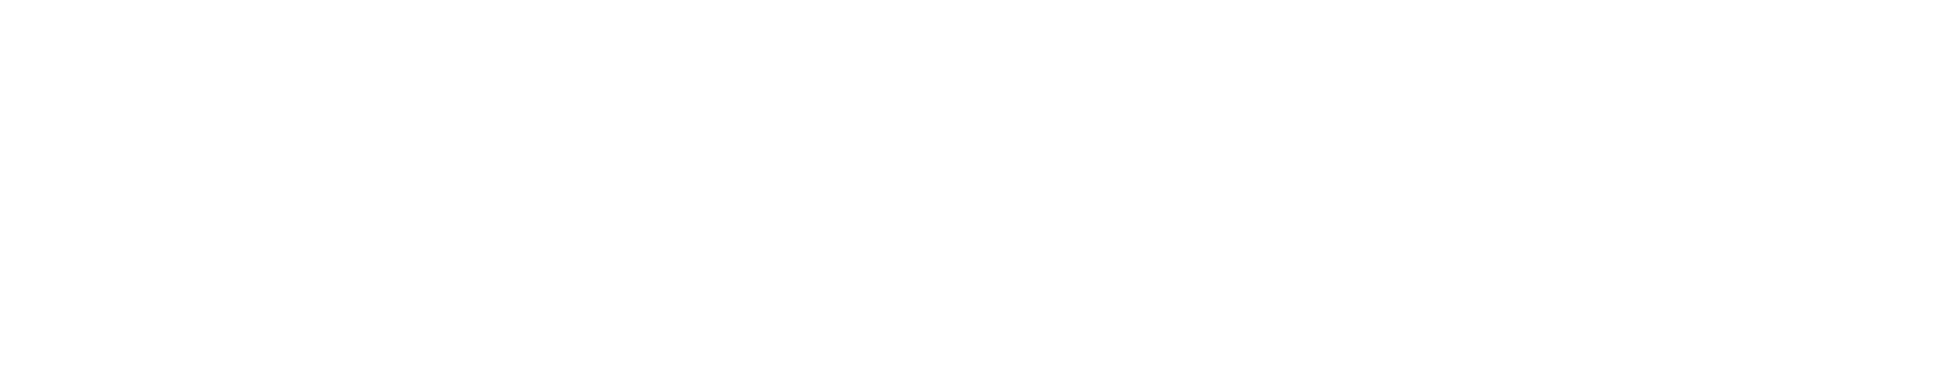 6.-Storage-Commander-Logo-Horizontal-All-White-1.png